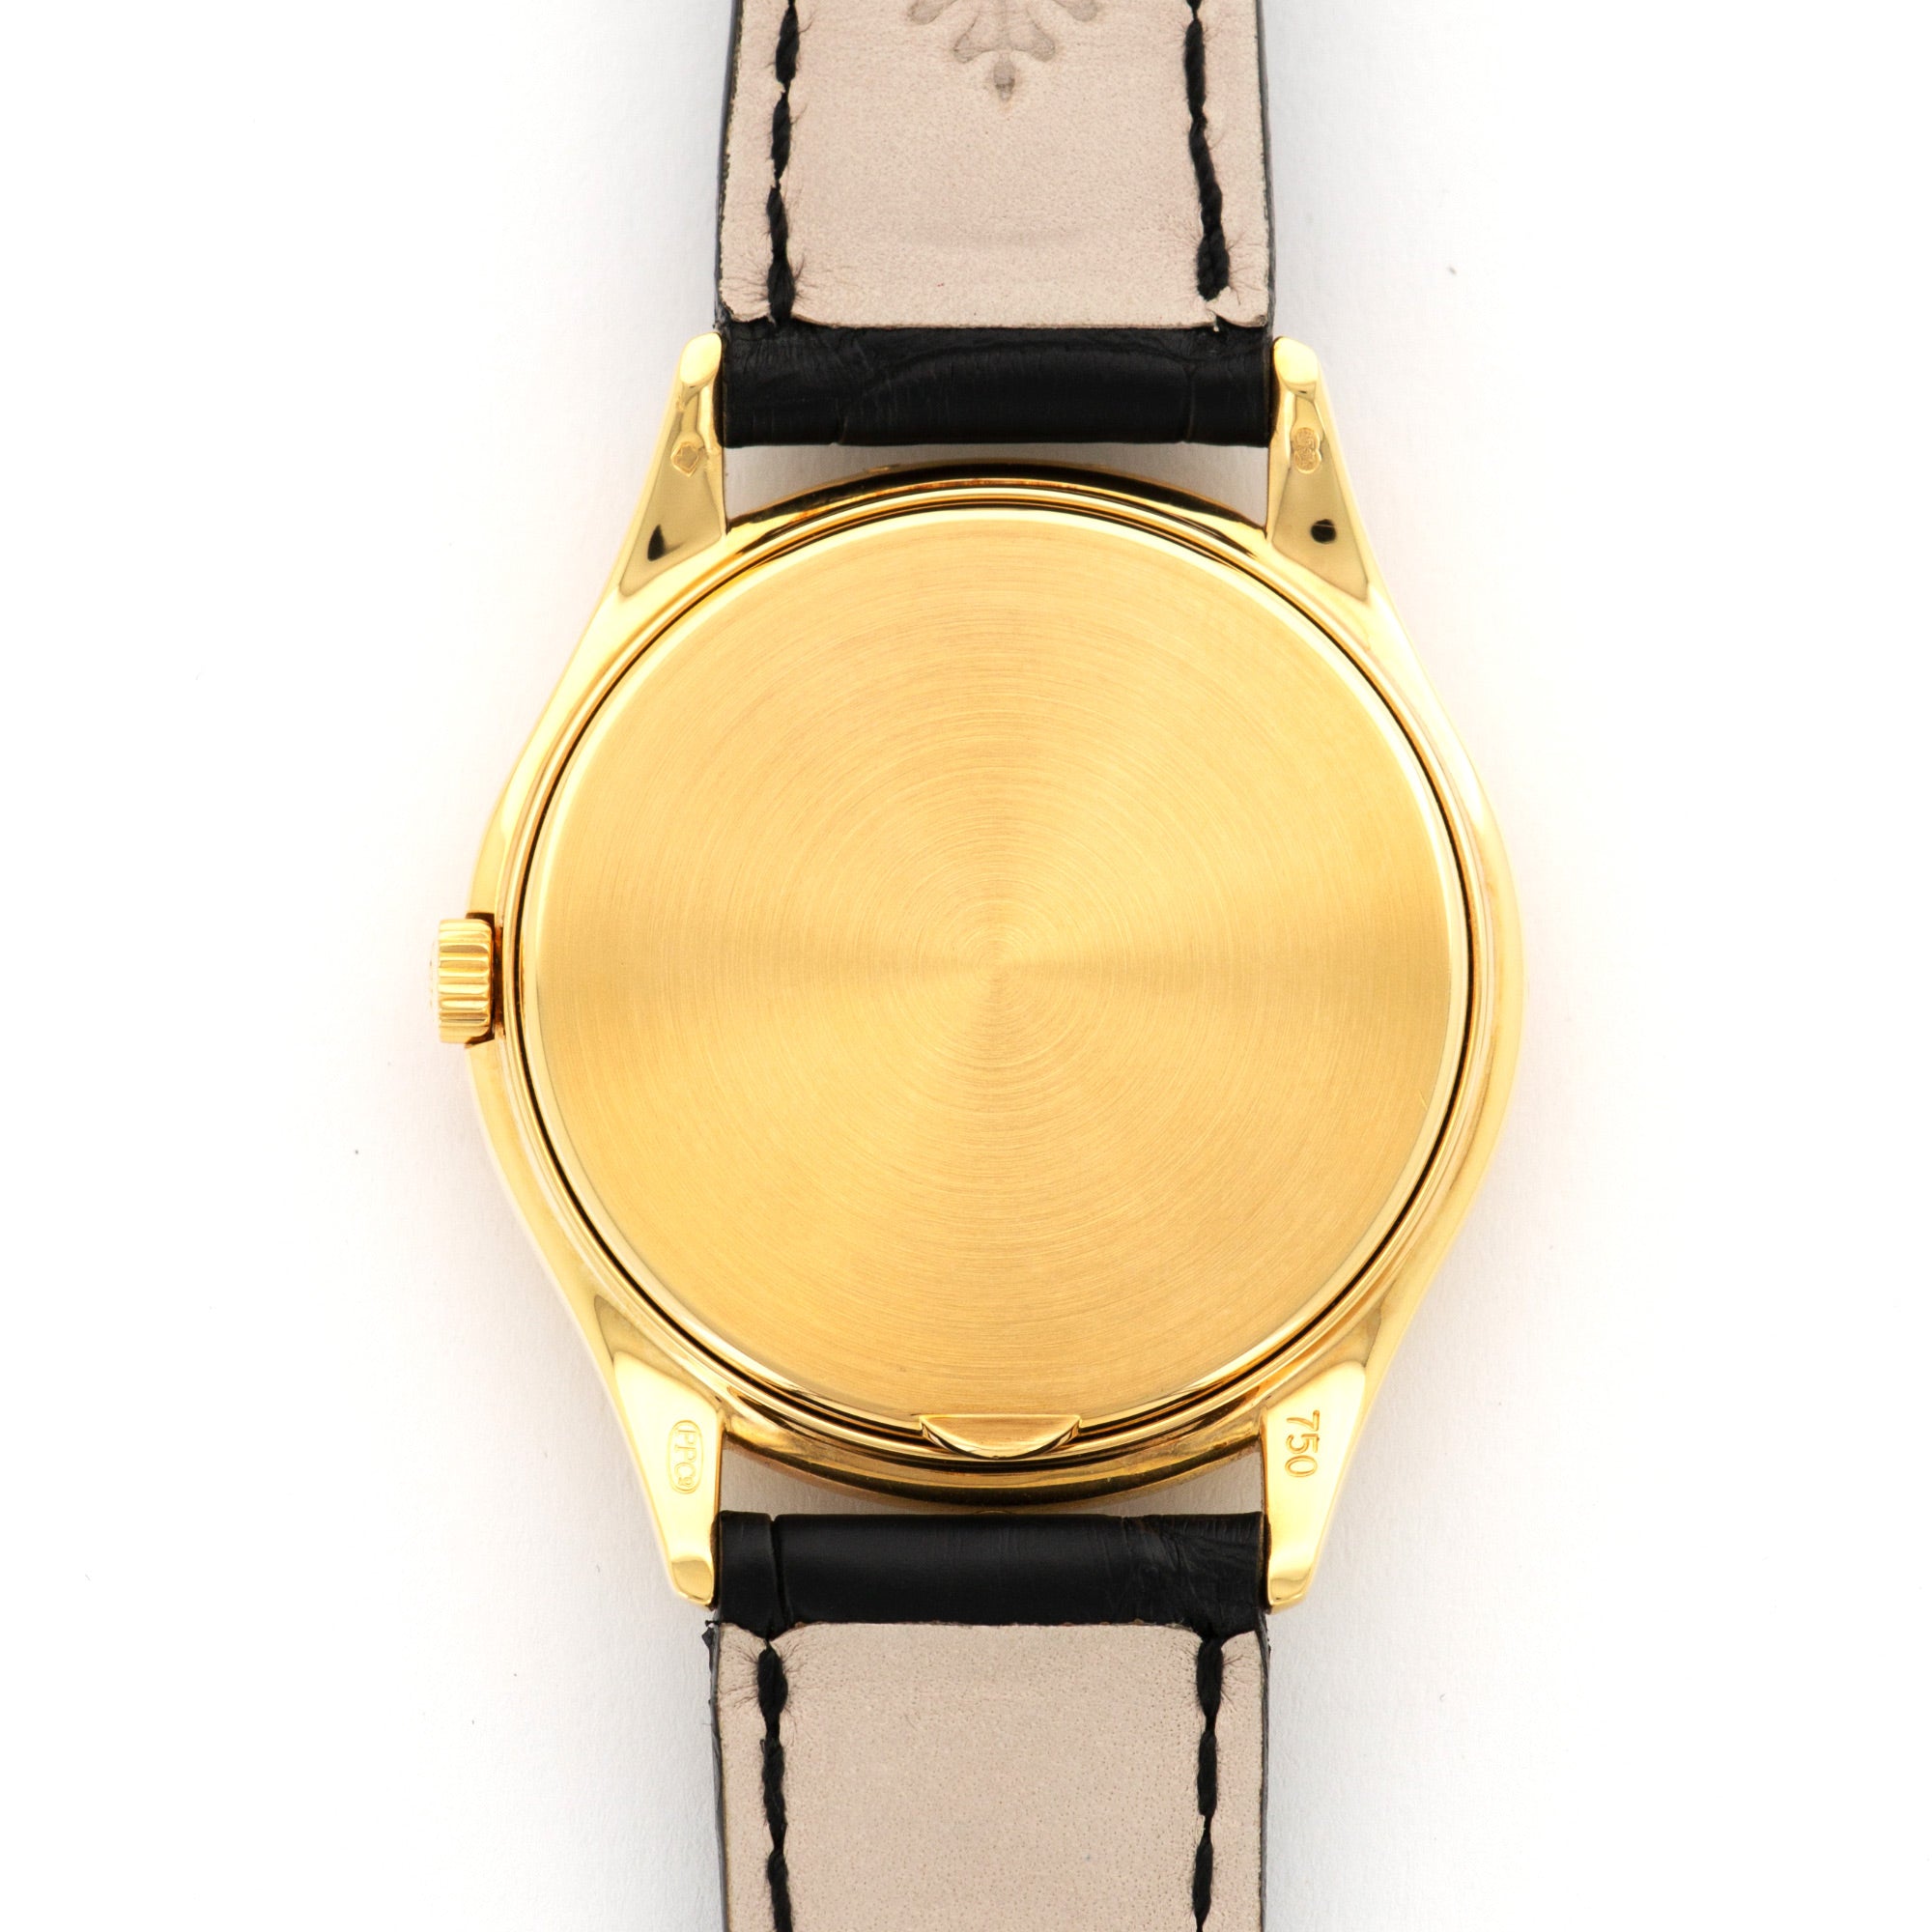 Patek Philippe - Patek Philippe Yellow Gold Perpetual Calendar Watch Ref. 3940 - The Keystone Watches